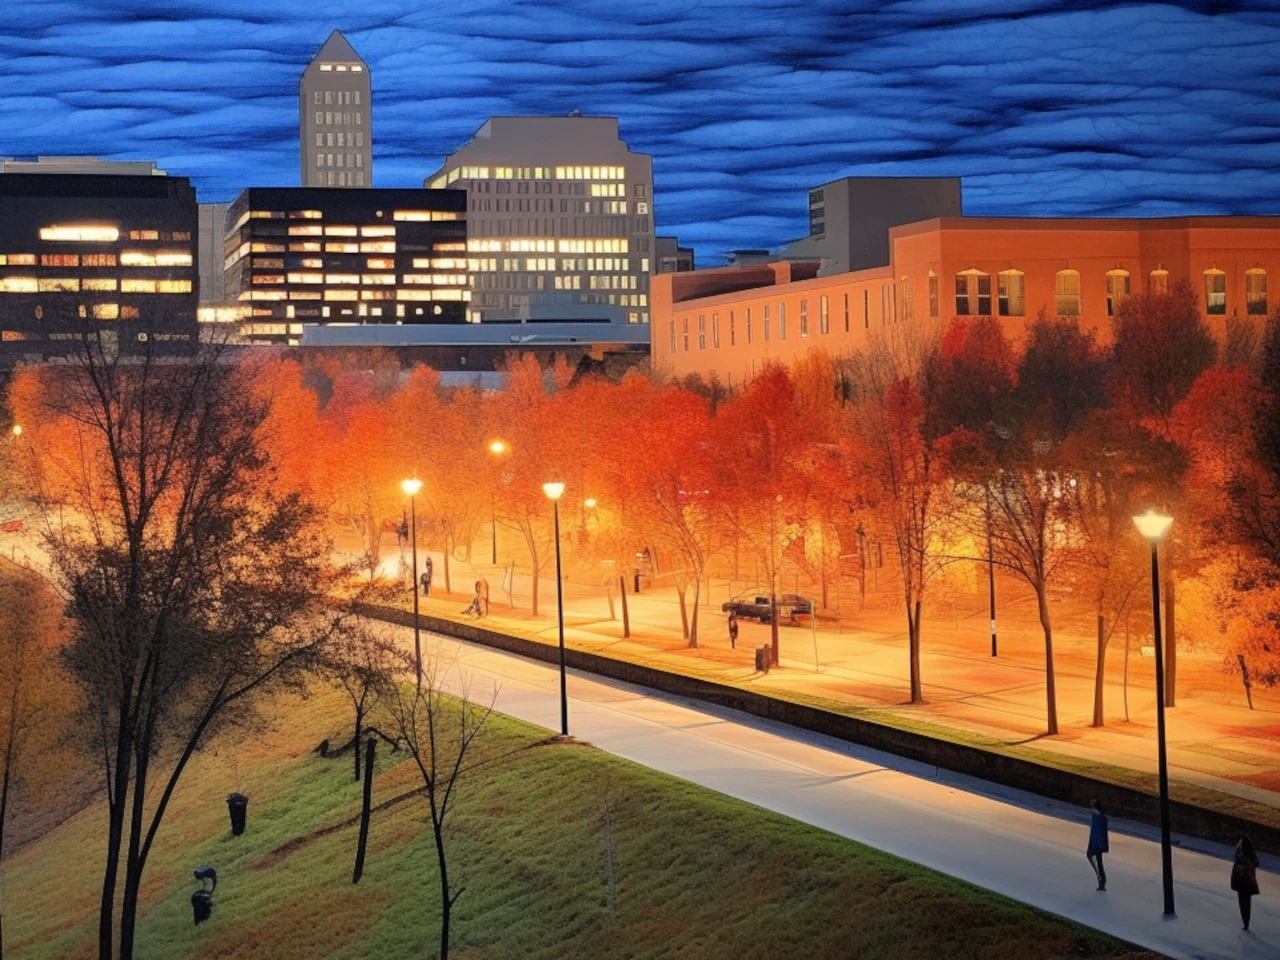 An artistic depiction of the Winston-Salem skyline at night